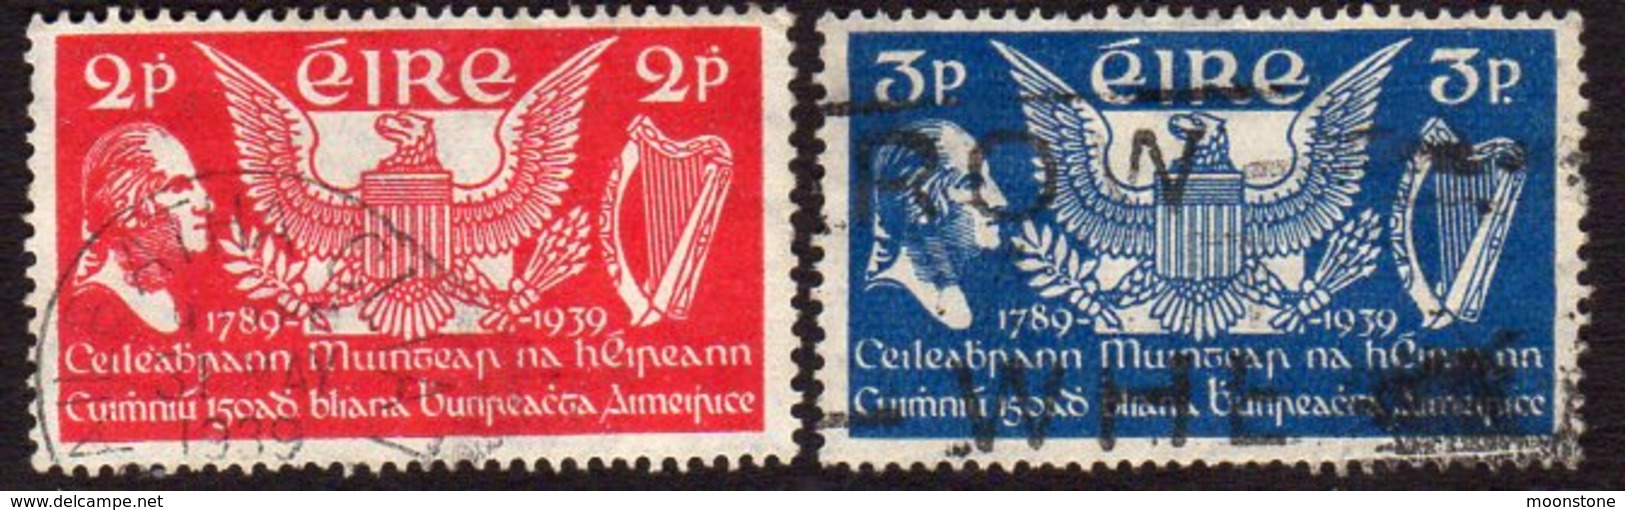 Ireland 1939 150th Anniversary Of US Constitution Set Of 2,used, SG 109/10 - Nuovi